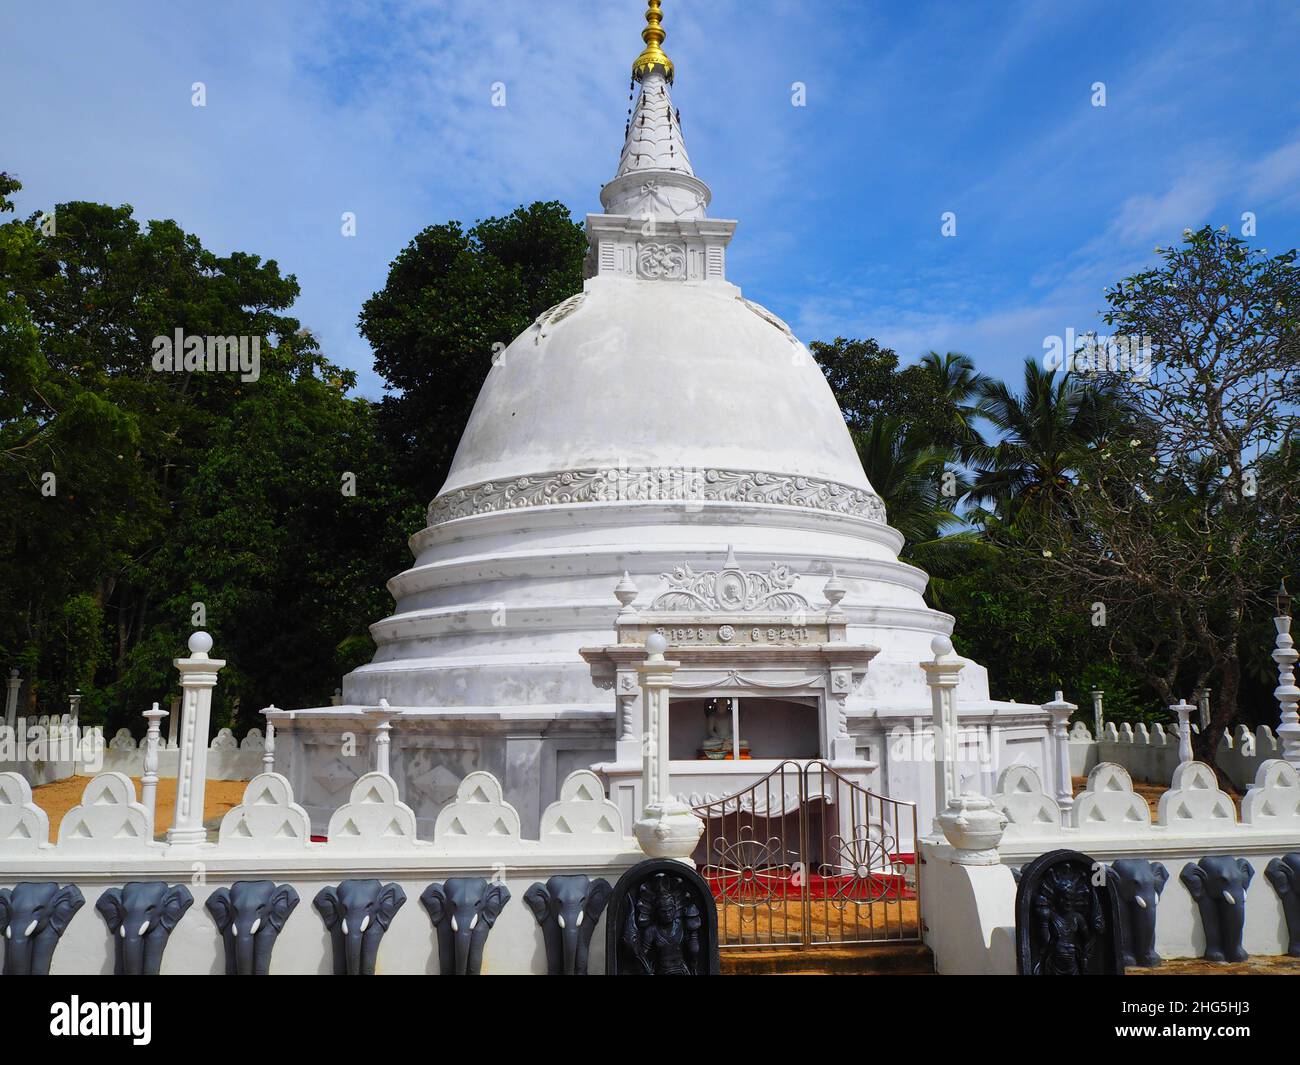 Pagoda, Tempio, Buddismo, viaggio di nuovo Asia sudorientale #Asia #aroundtheworld #hinterland #Authentic #fernweh #slowtravel #loveasia Foto Stock